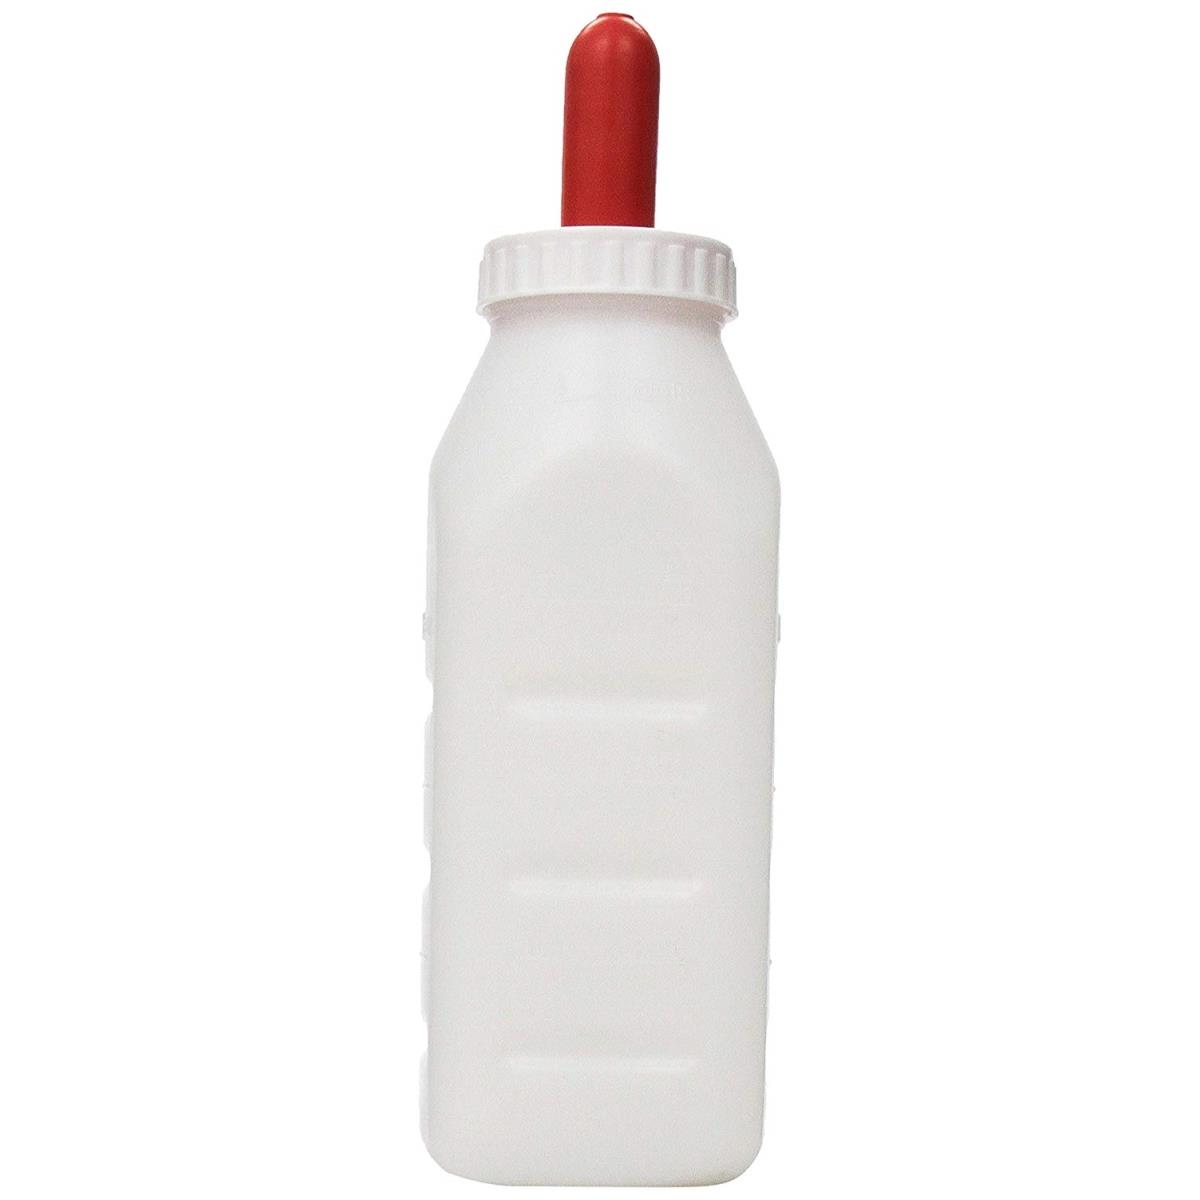 Lbh2 2 Qut Snap On Nipple Calf Bottle With Handle